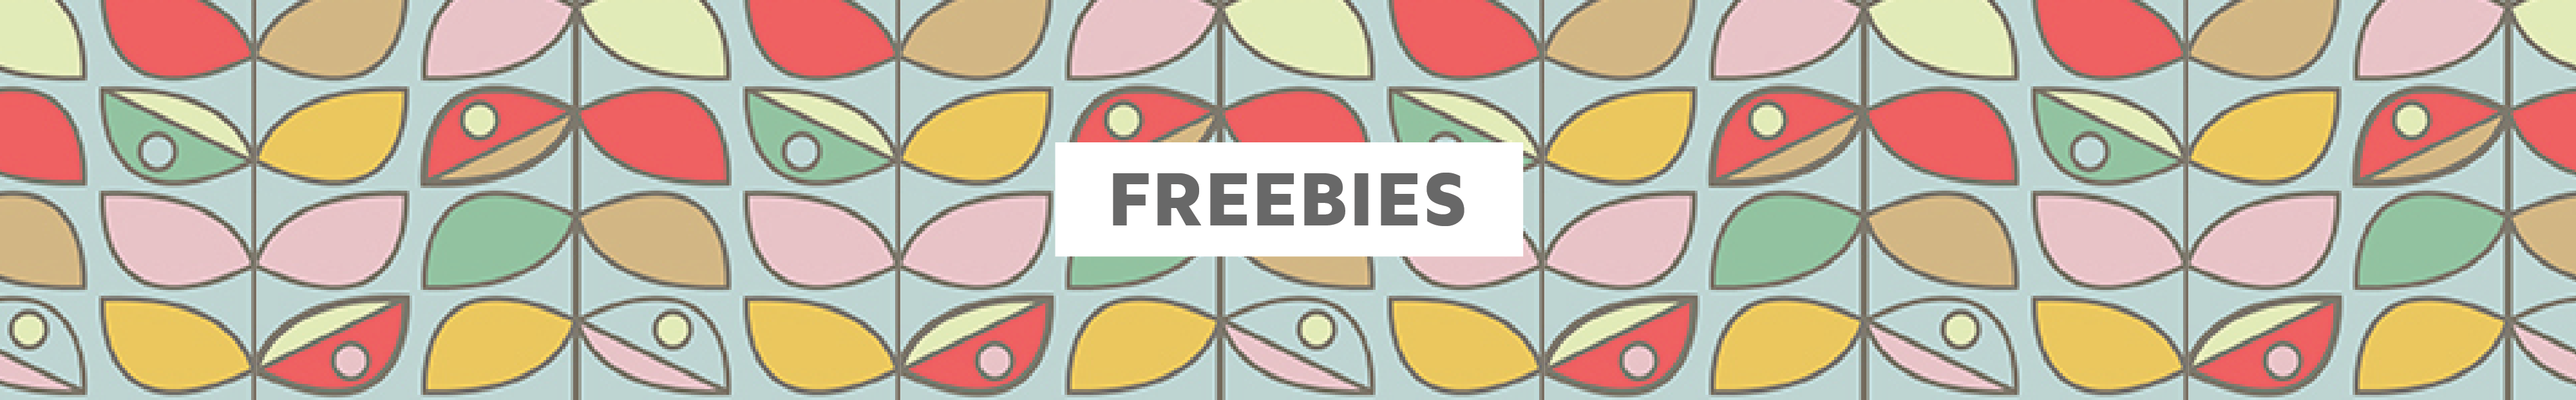 Freebies Banner-01